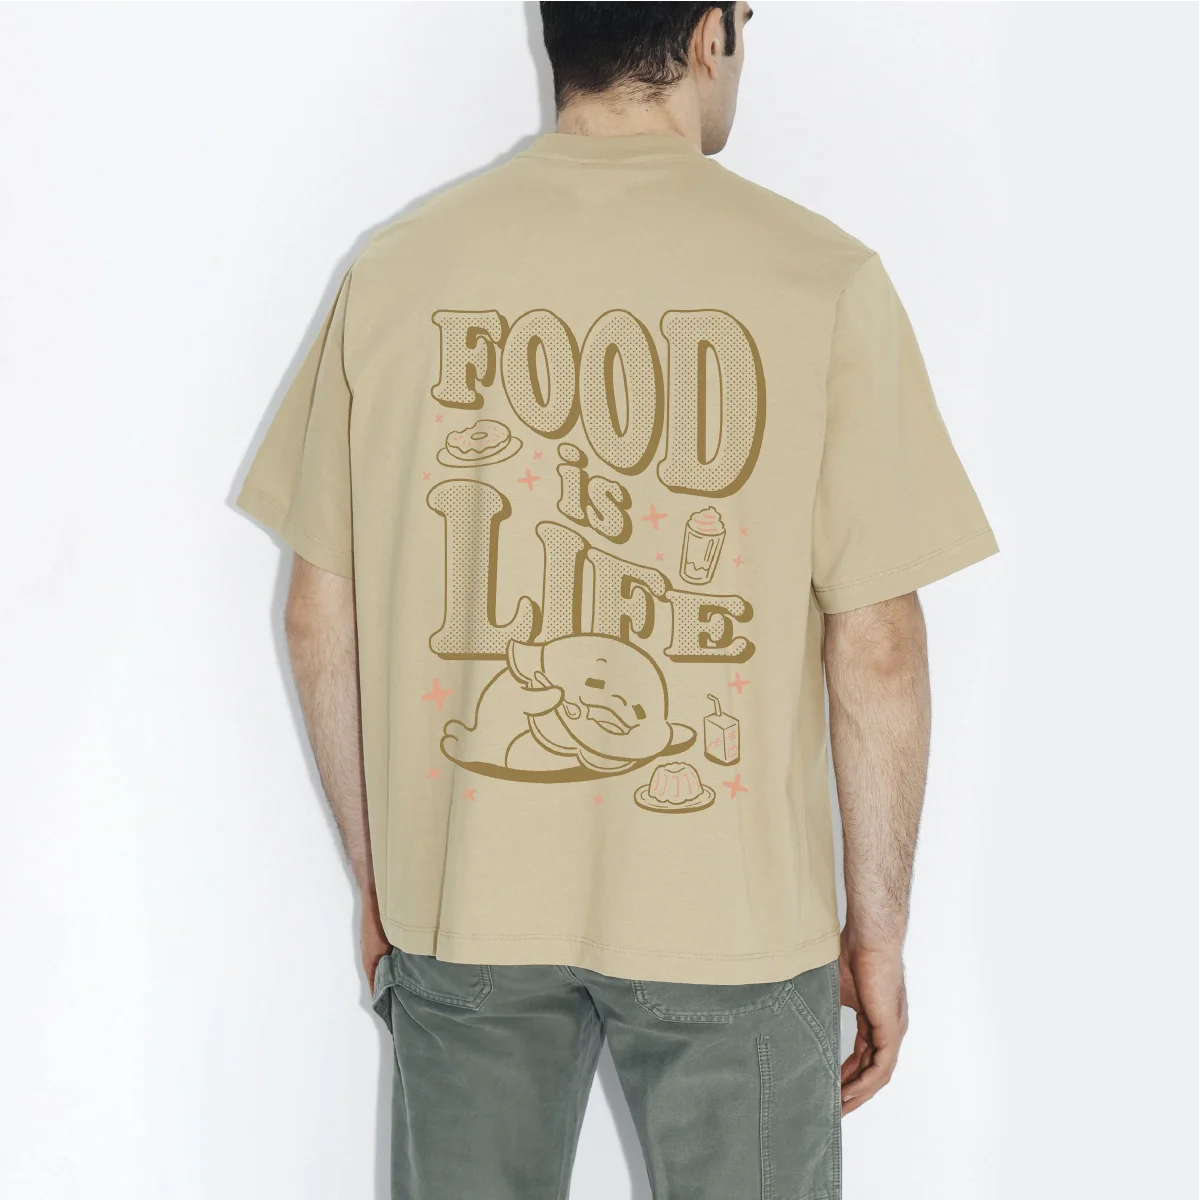 Jolly Food Is Life Beige Tadaland Shirt Design